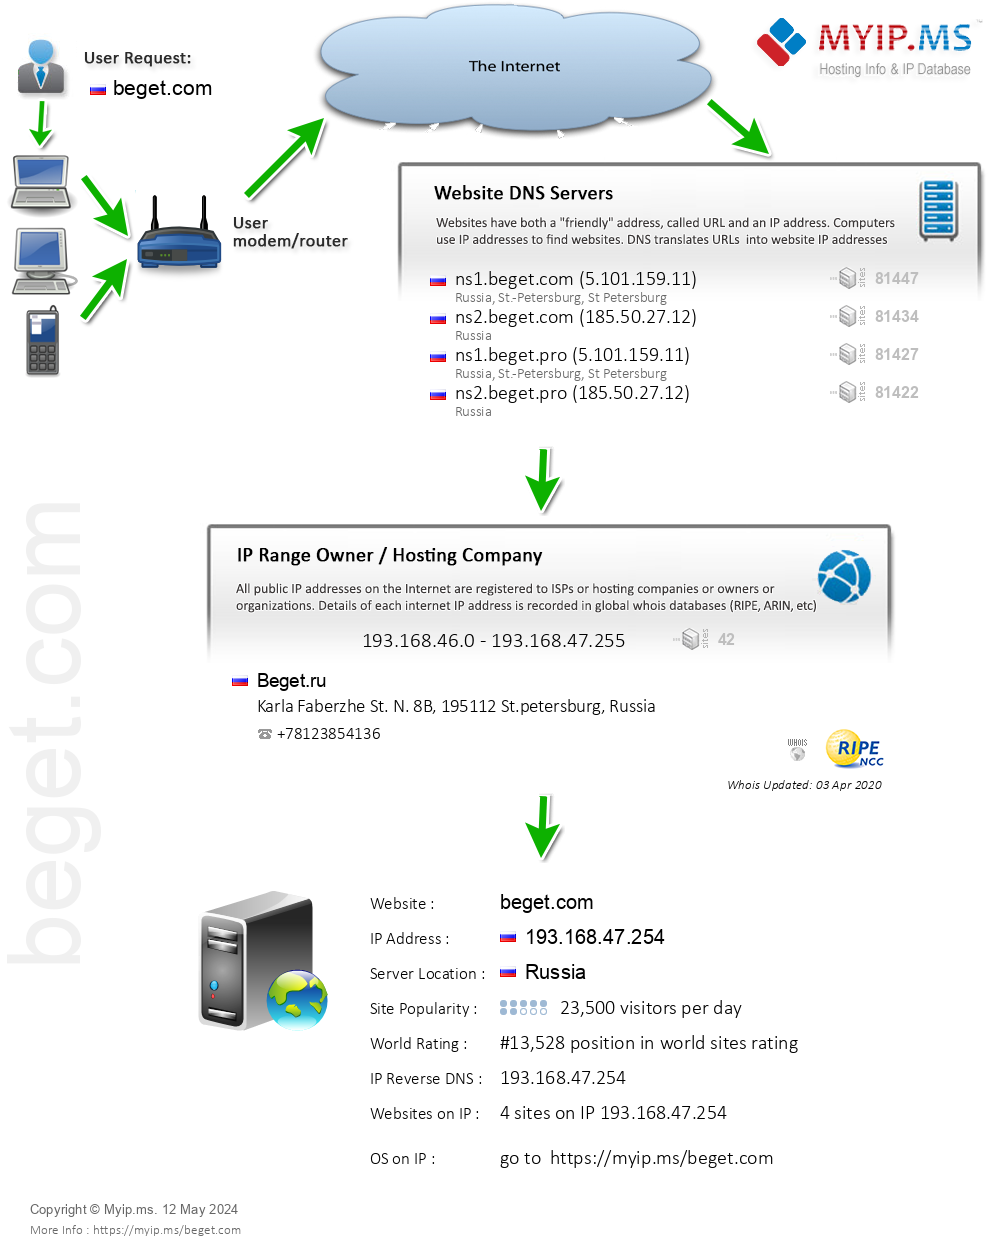 Beget.com - Website Hosting Visual IP Diagram